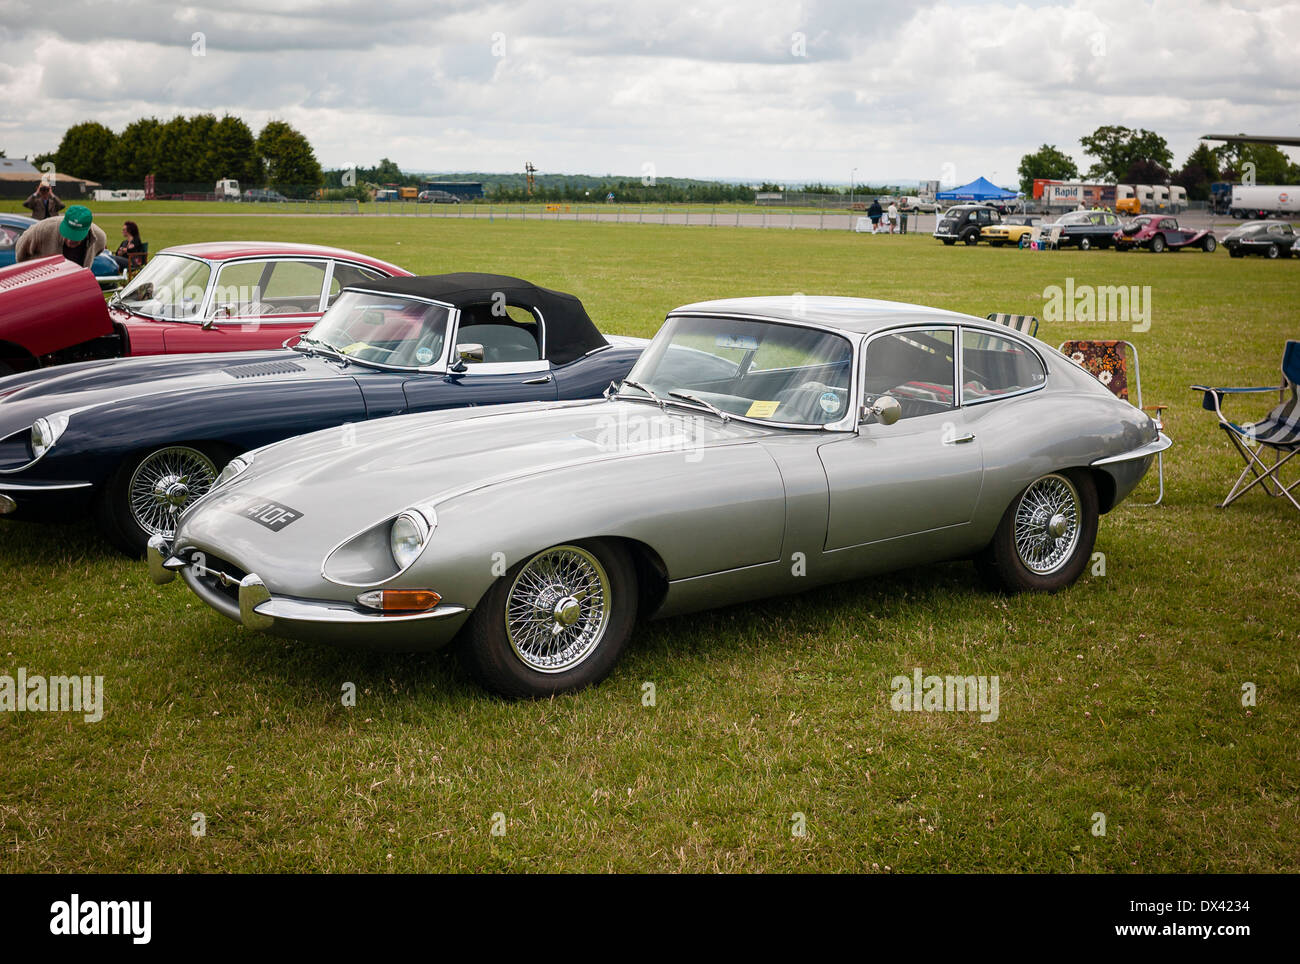 Classic Jaguar 'E' Type sports saloon car in UK Stock Photo